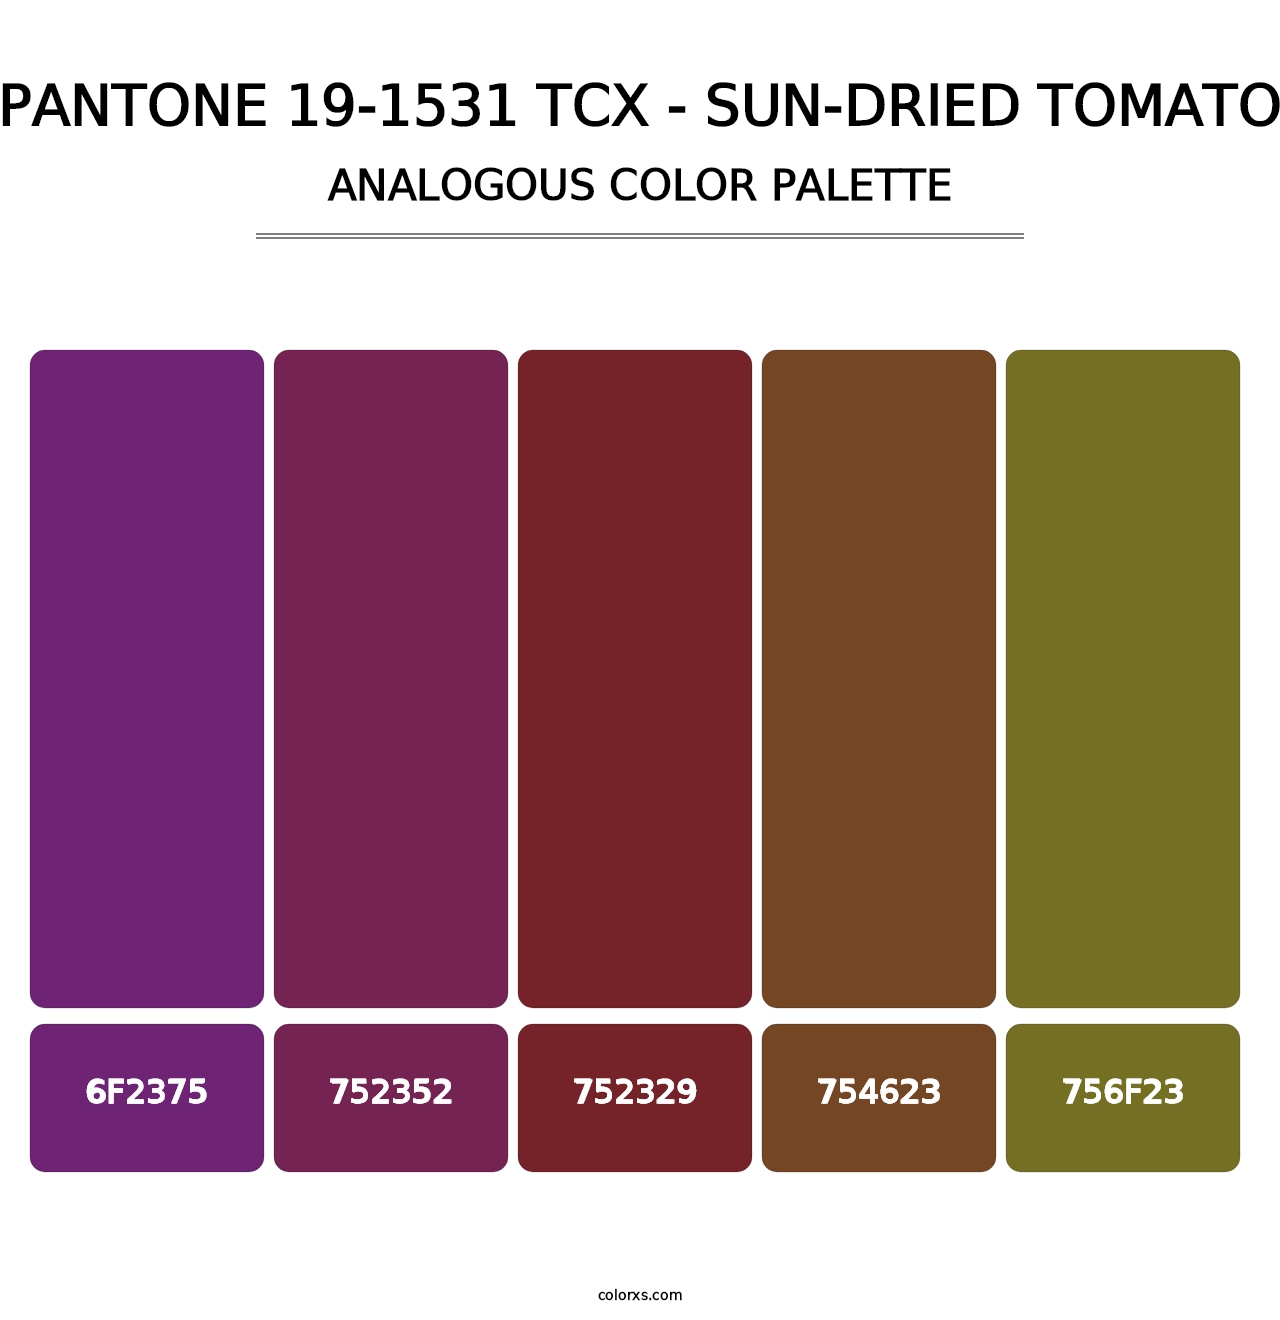 PANTONE 19-1531 TCX - Sun-Dried Tomato - Analogous Color Palette